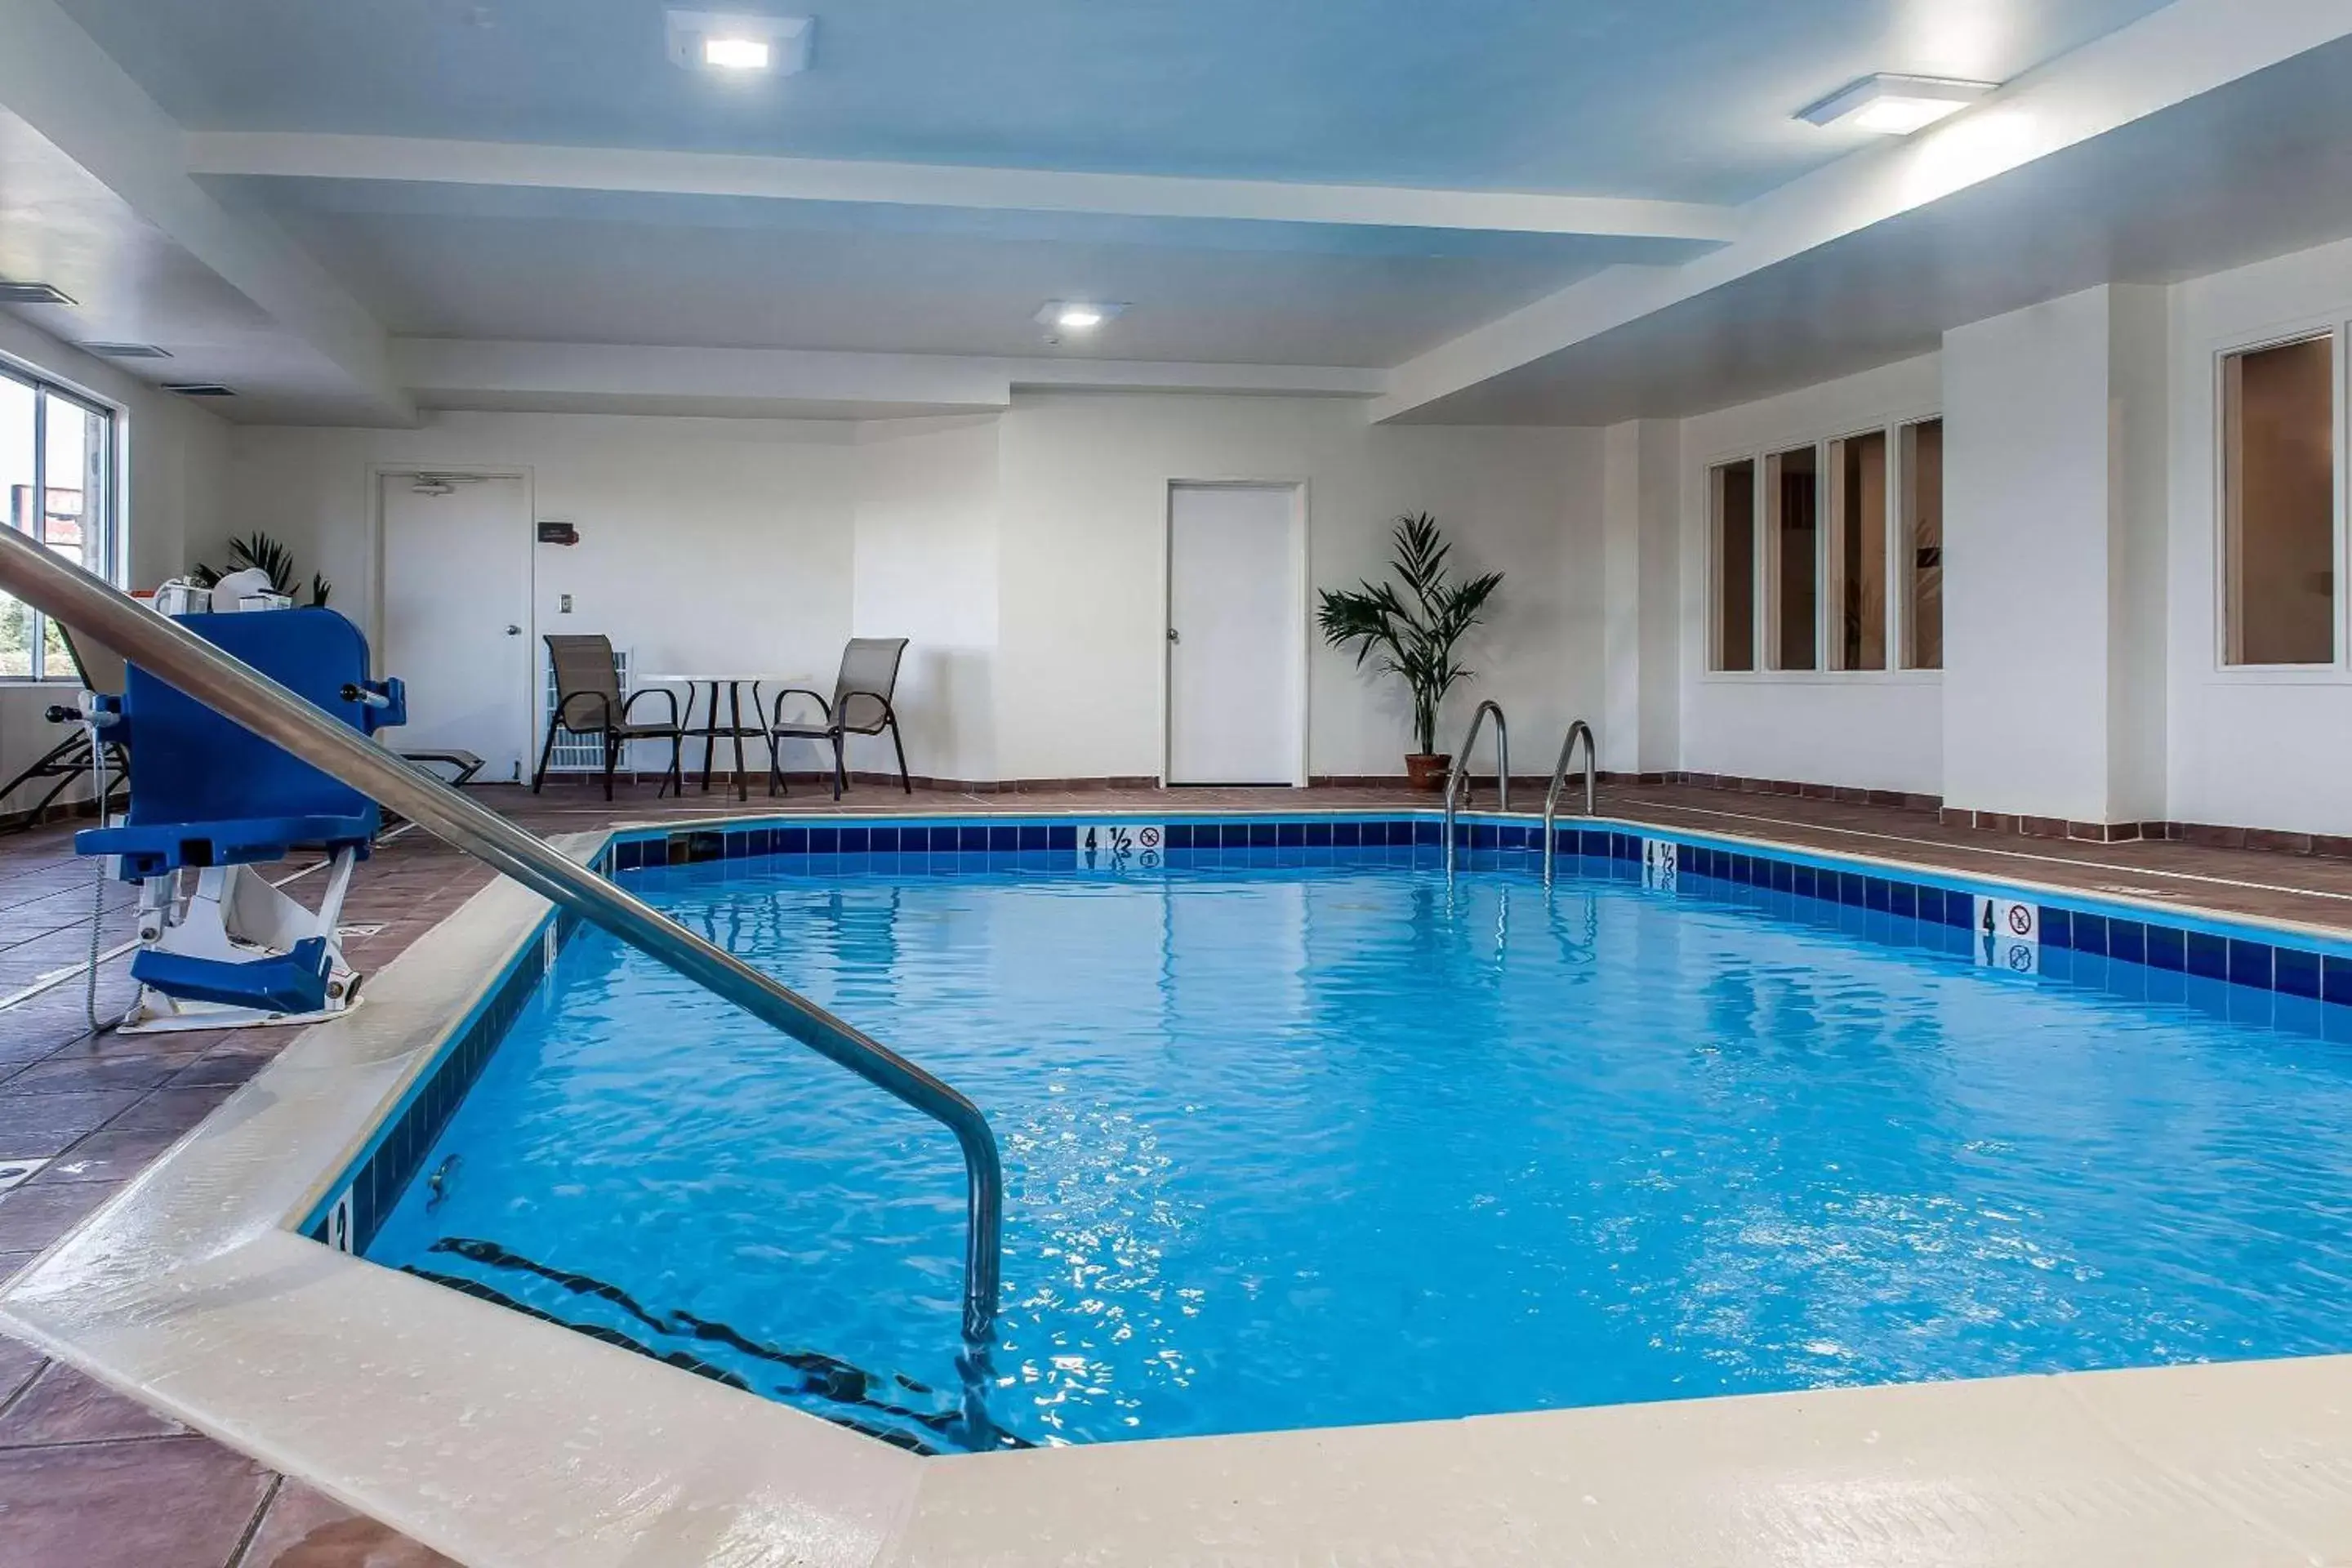 On site, Swimming Pool in Comfort Inn & Suites Mount Sterling